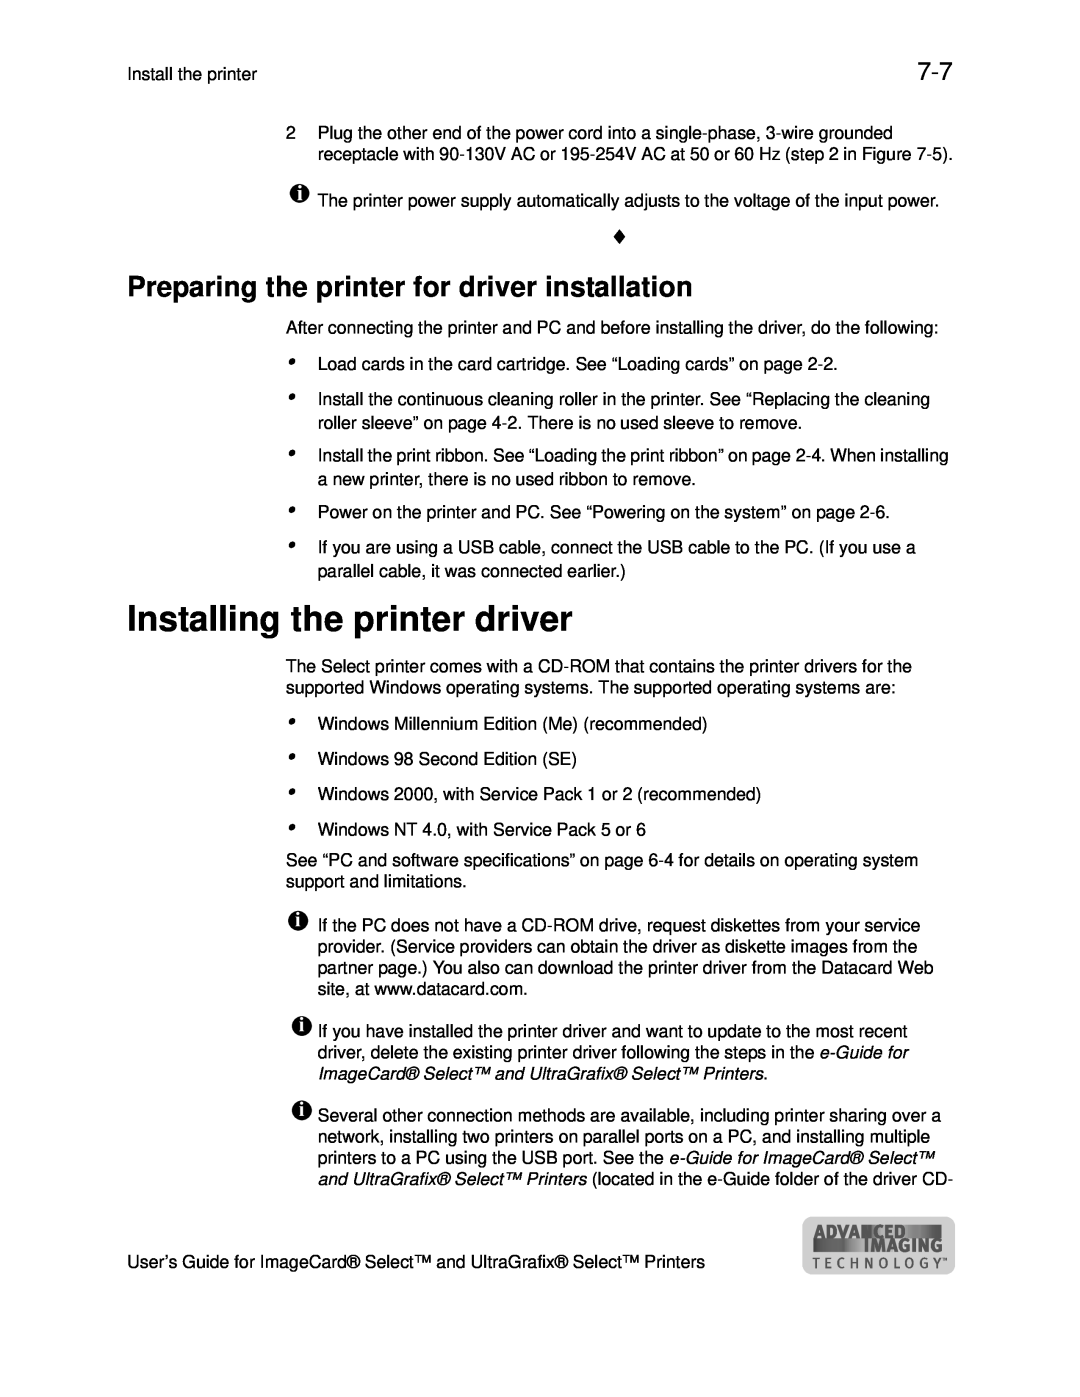 Datacard Group ImageCard SelectTM and UltraGrafix SelectTM Printers manual Installing the printer driver 